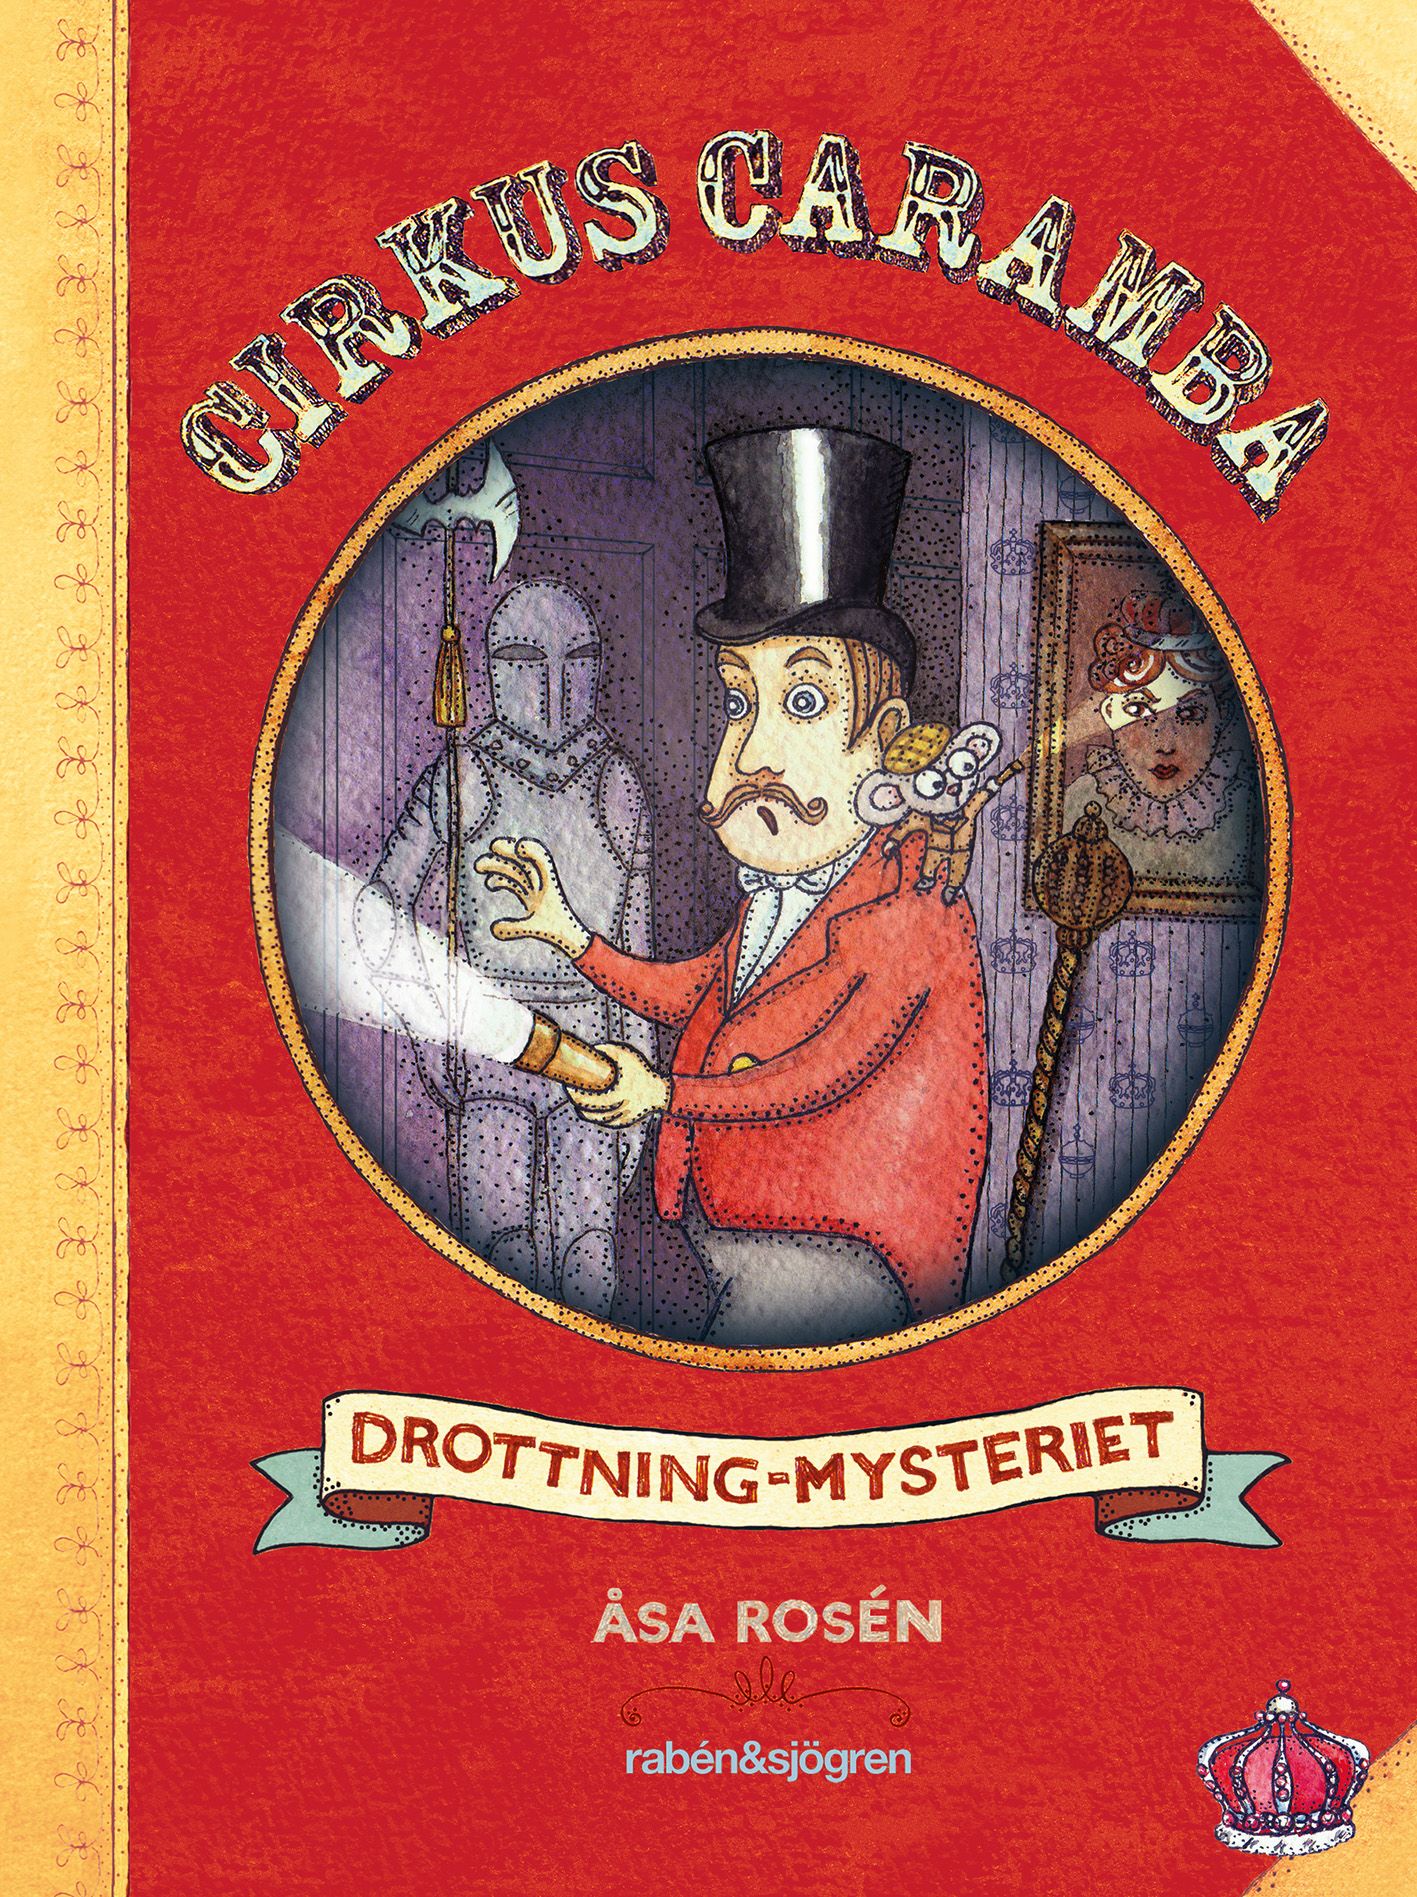 Cirkus Caramba. Drottning-mysteriet, eBook by Åsa Rosén